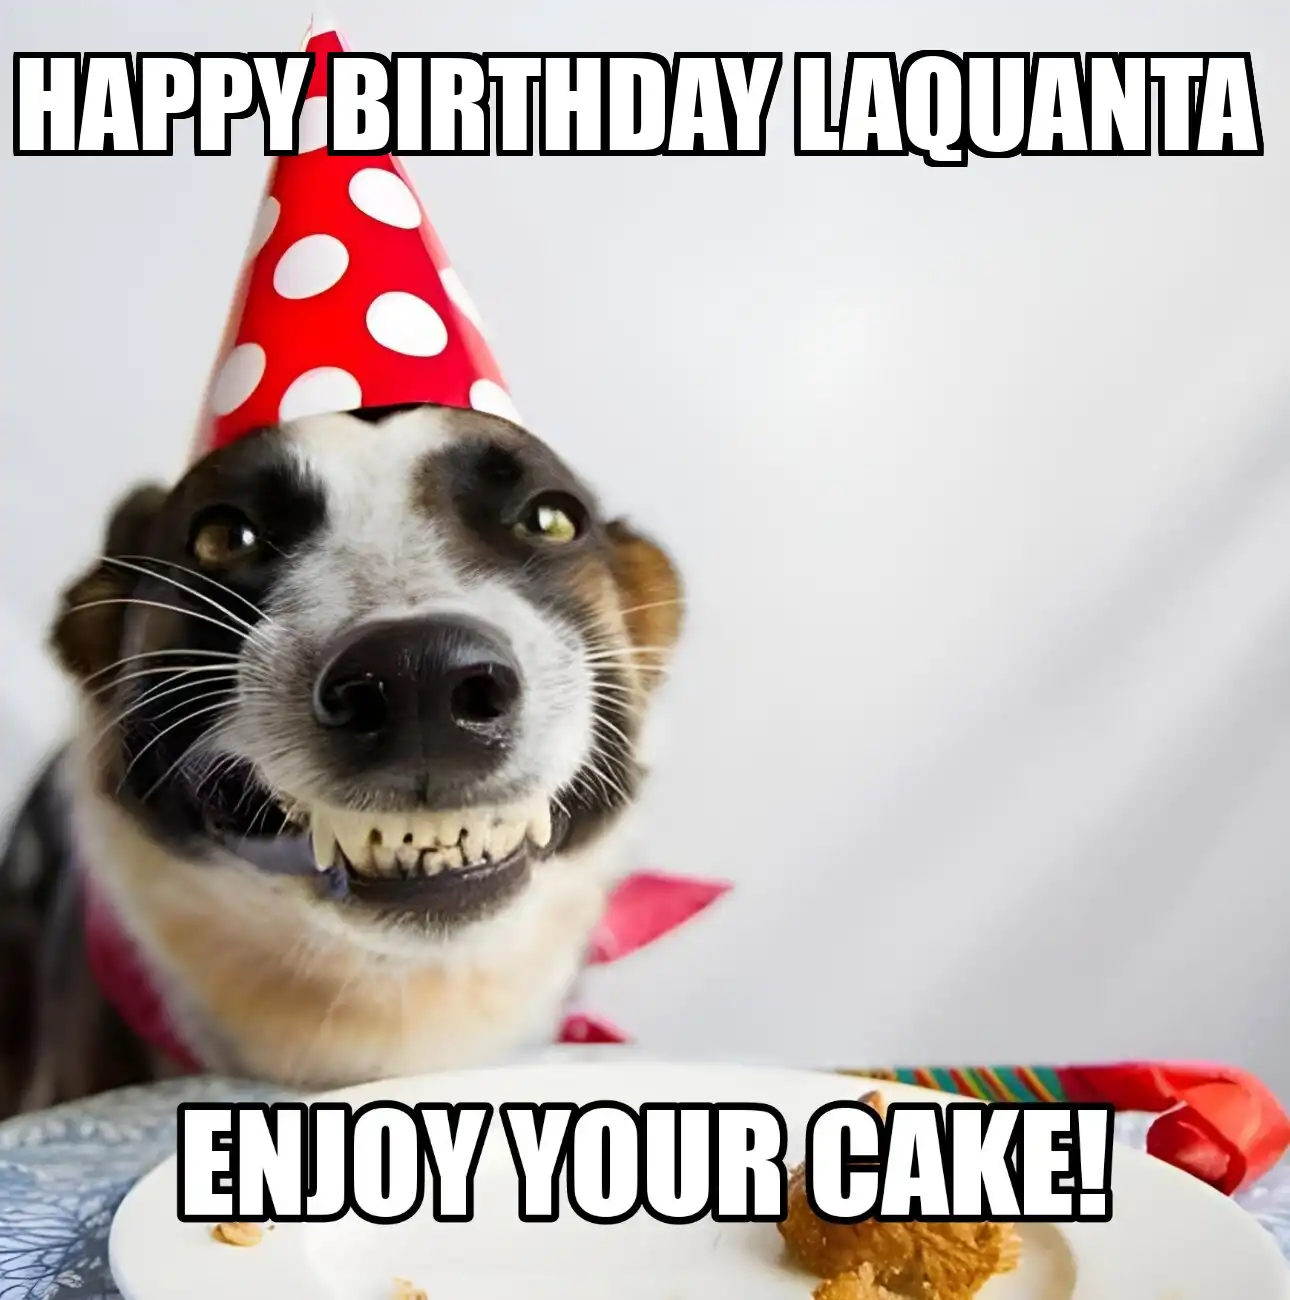 Happy Birthday Laquanta Enjoy Your Cake Dog Meme